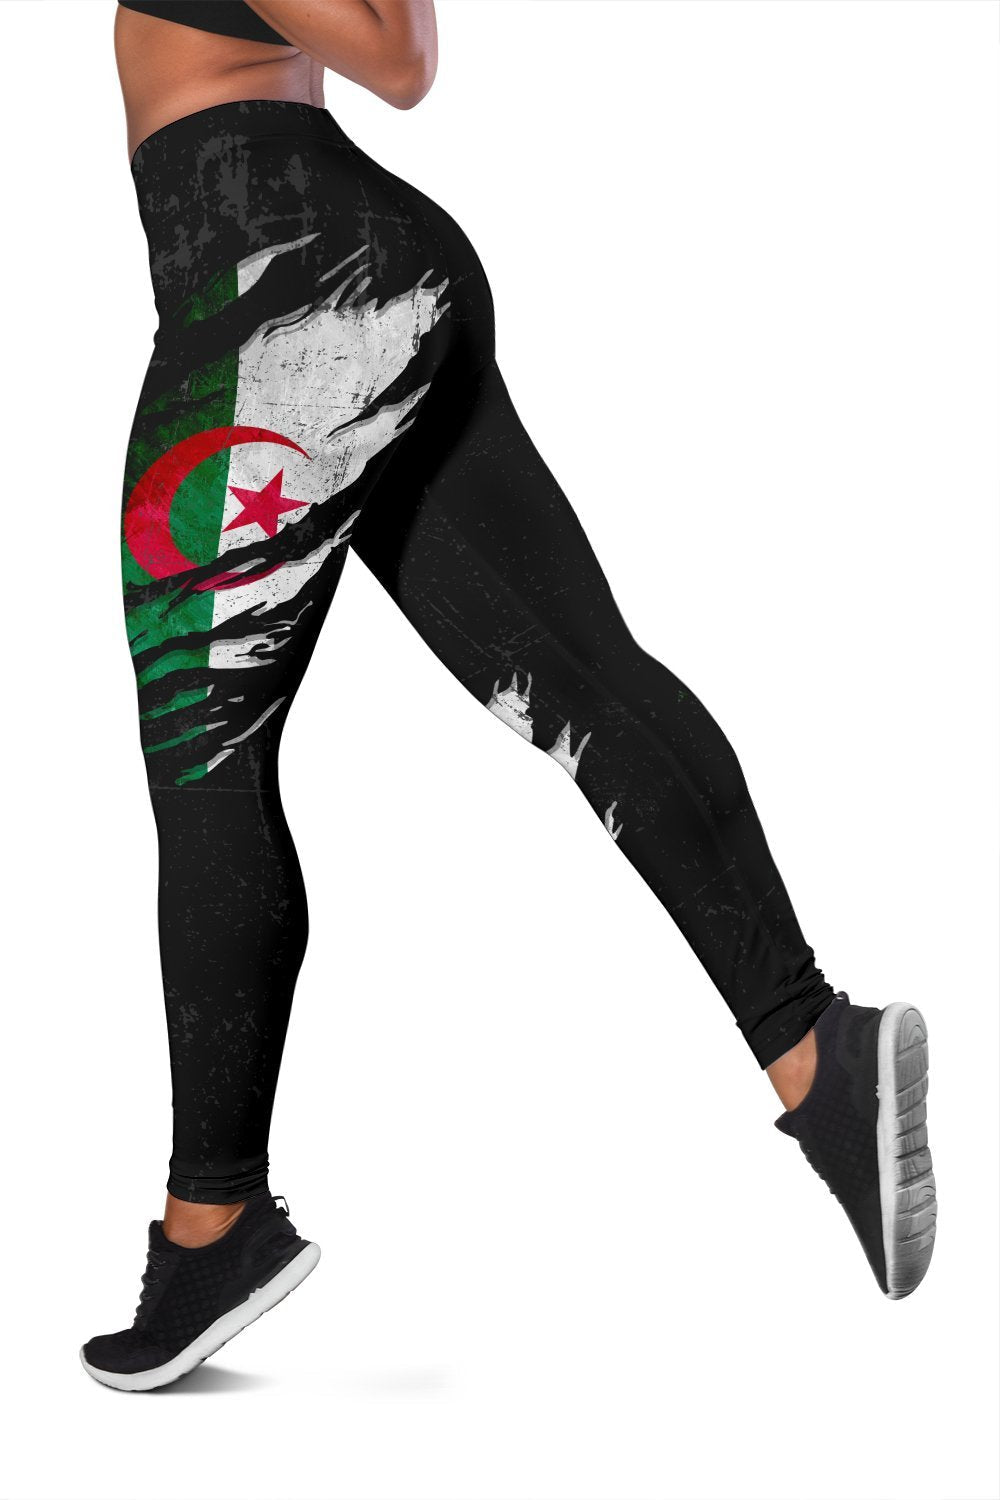 algeria-in-me-womens-leggings-special-grunge-style